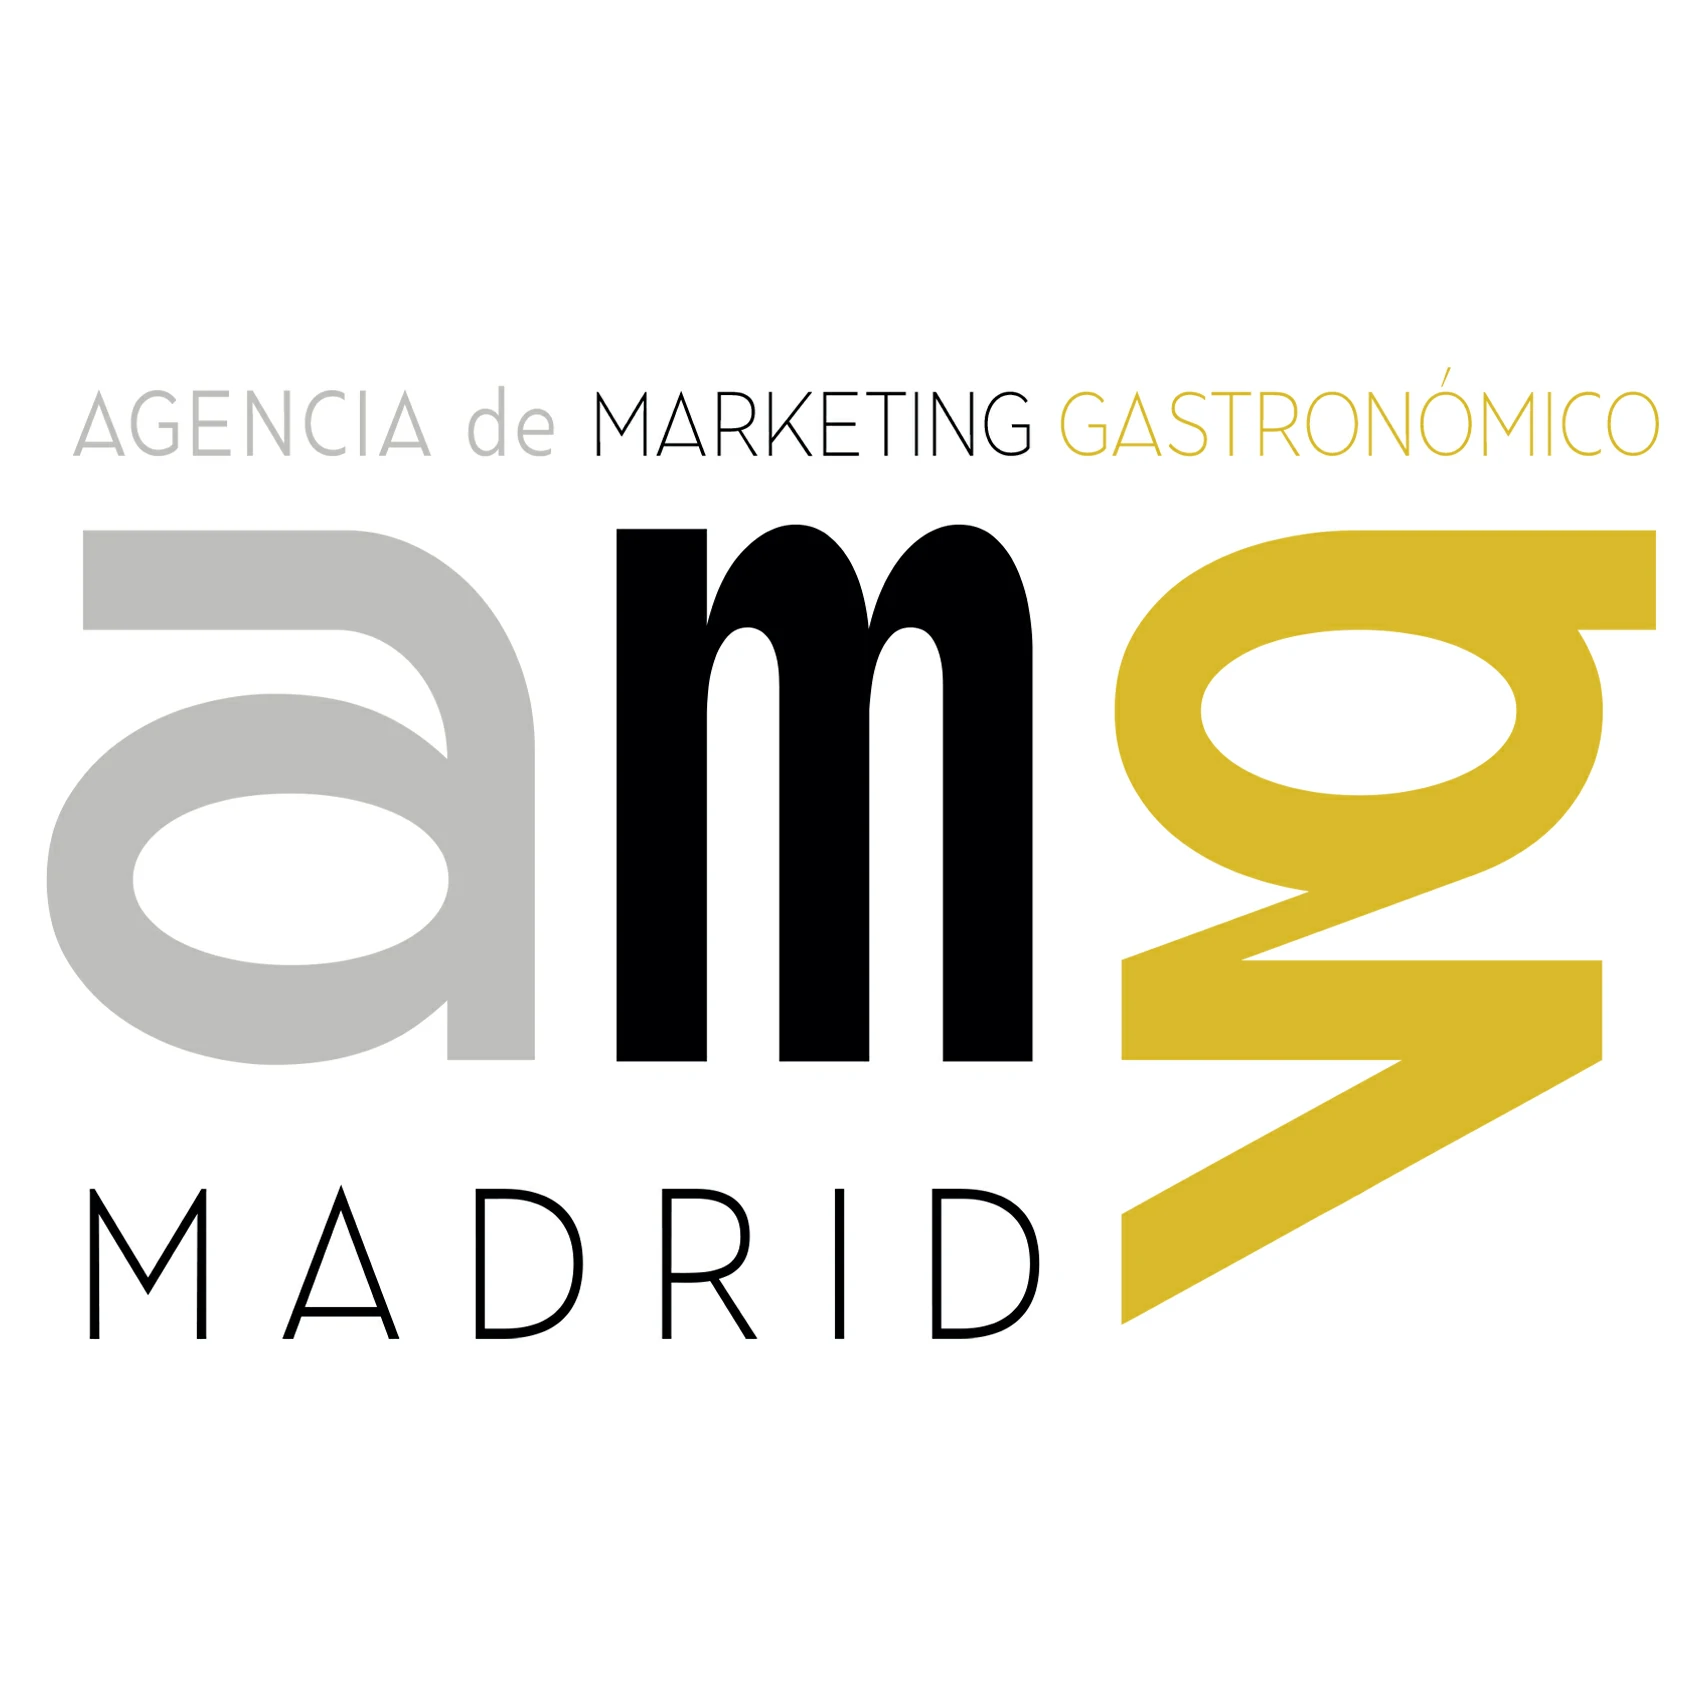 LOGO AMG MADRID AGENCIA DE MARKETING GASTRONÓMICO